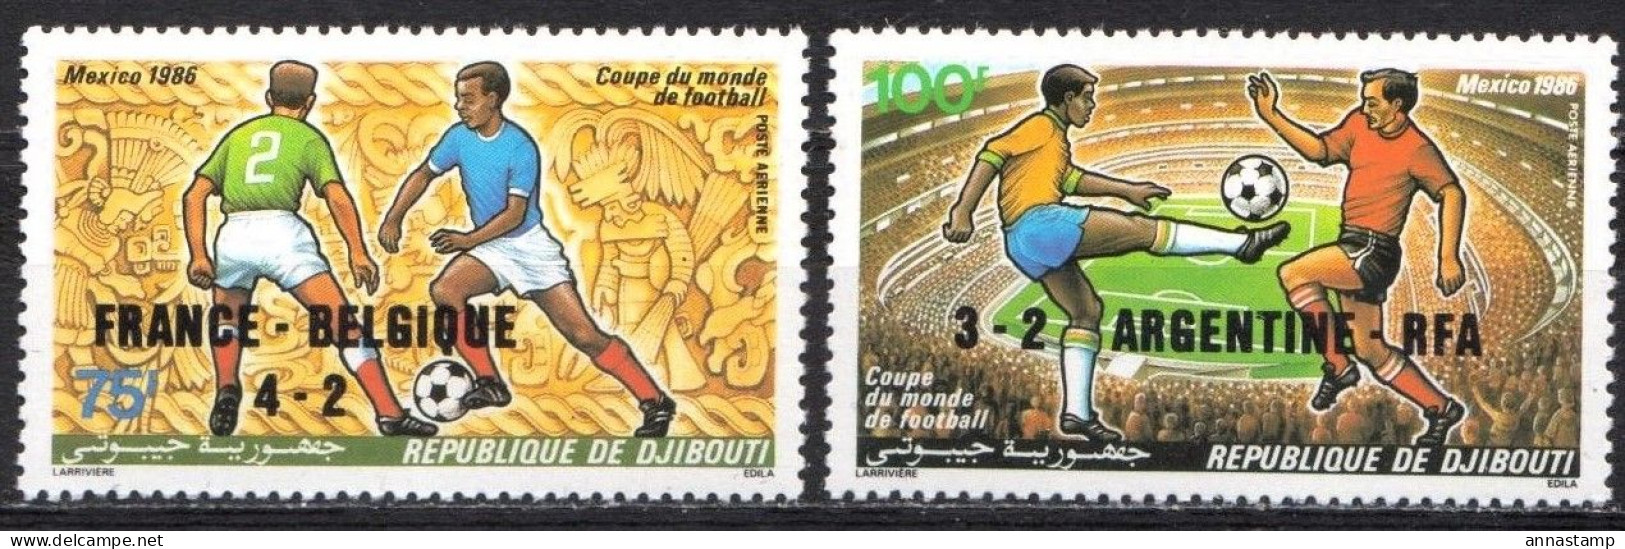 Djibouti MNH Overprinted Pair - 1986 – Mexique